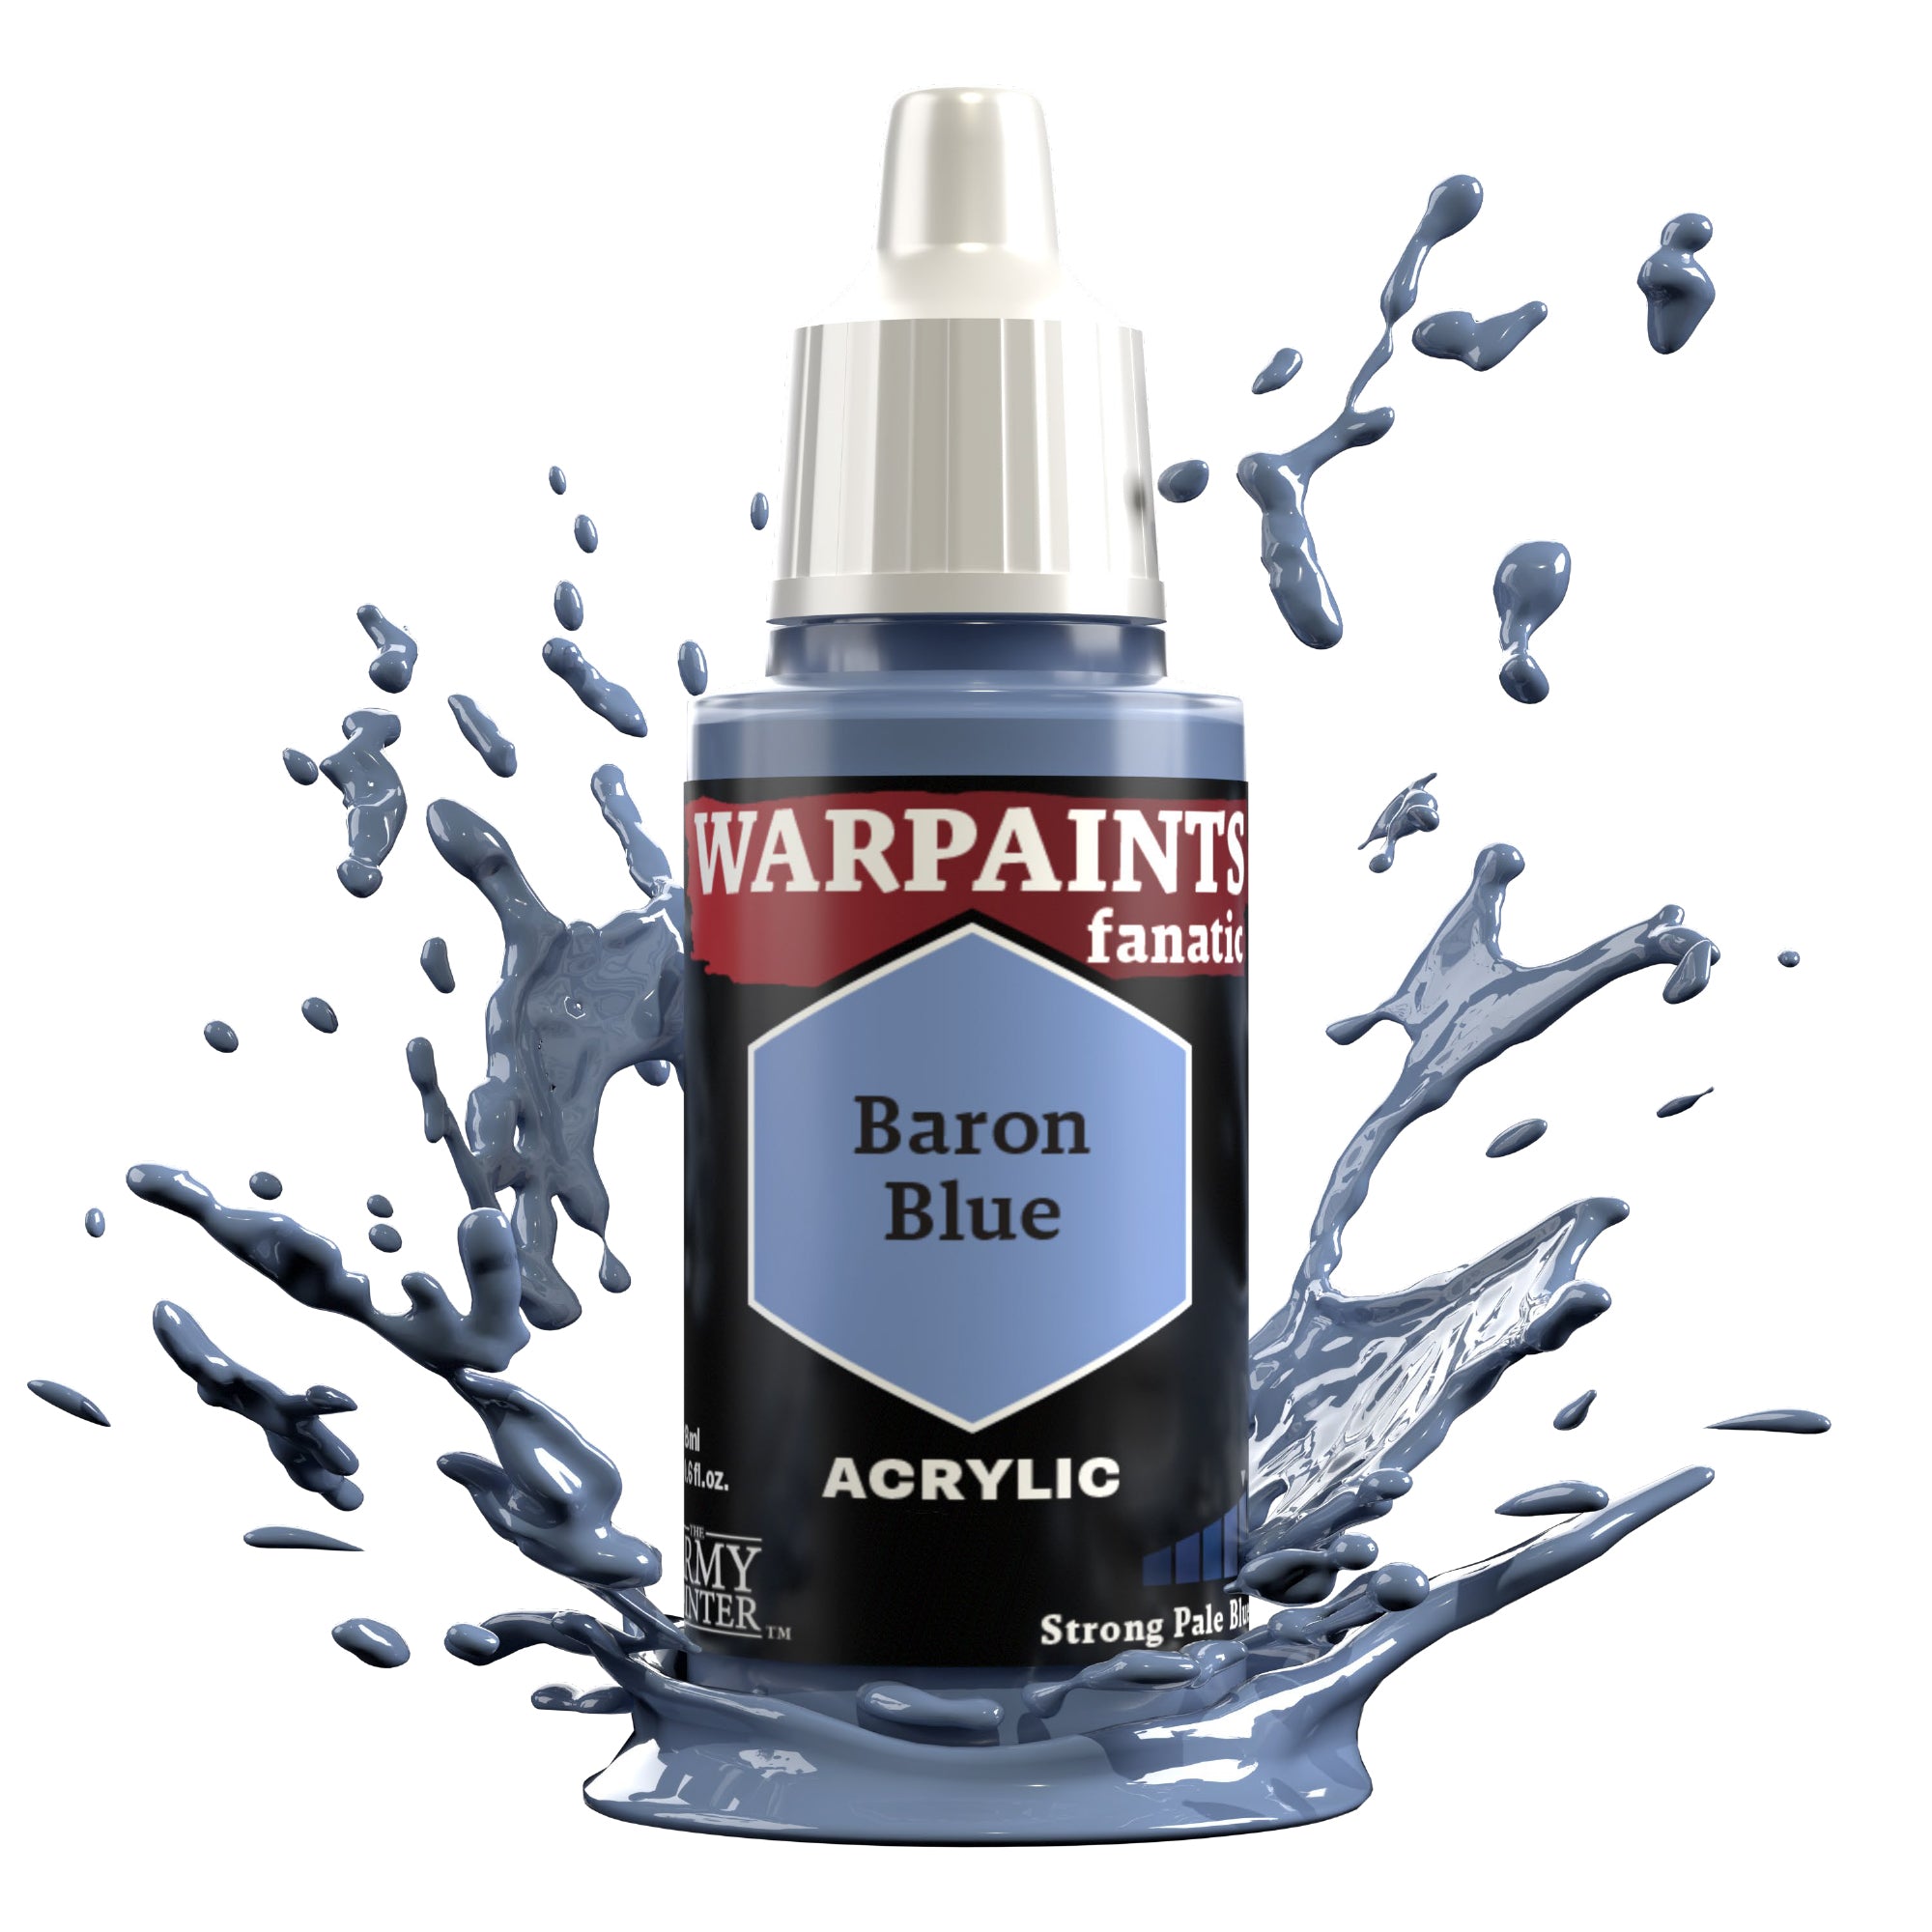 WARPAINTS: FANATIC ACRYLIC BARON BLUE